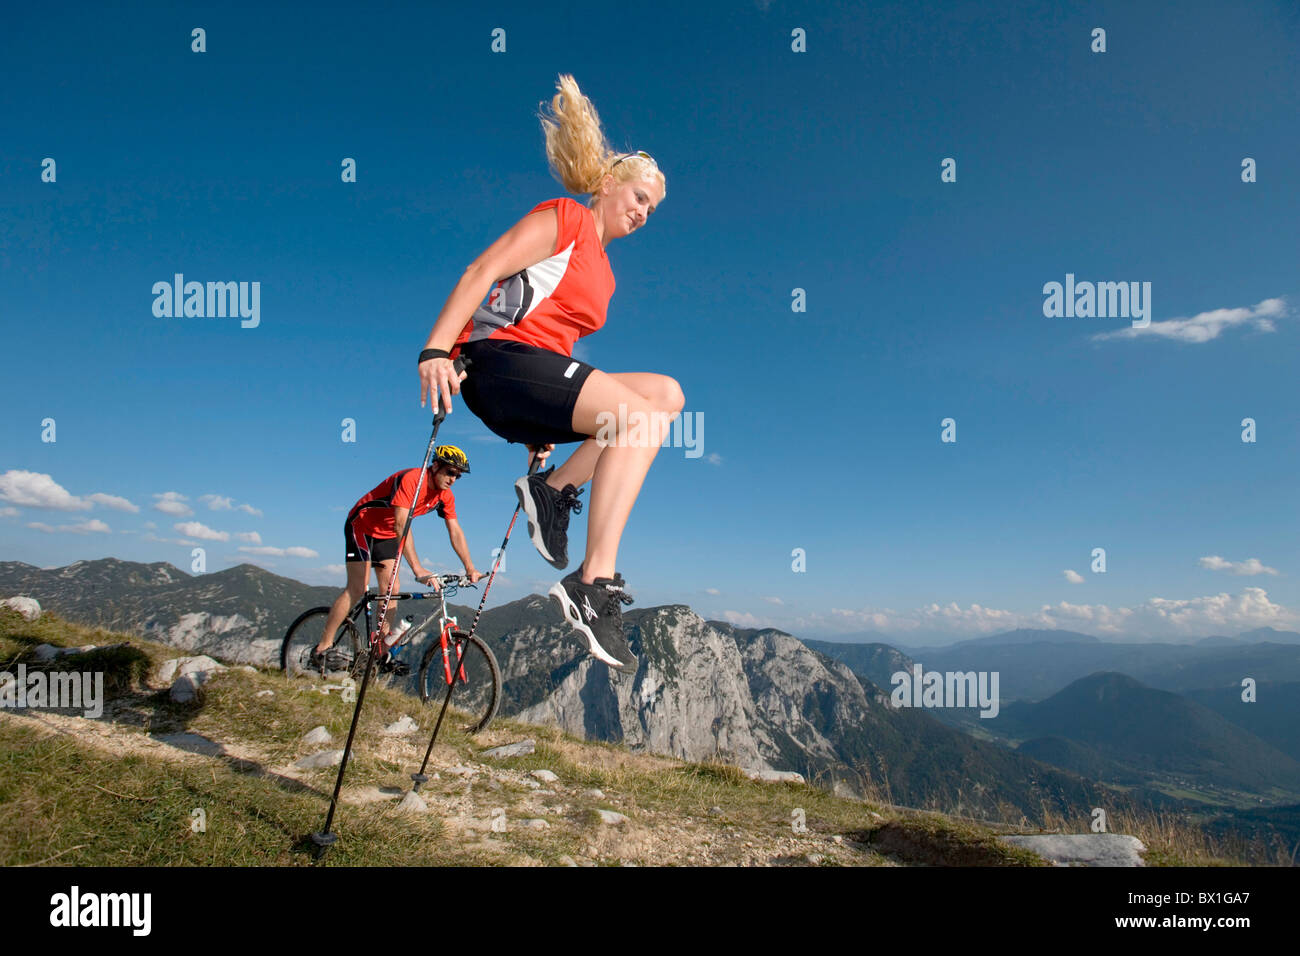 Mountain bike Biking man bicycle bike bike woman Nordic Walking action jump hiker hiking mountains Alps Stock Photo